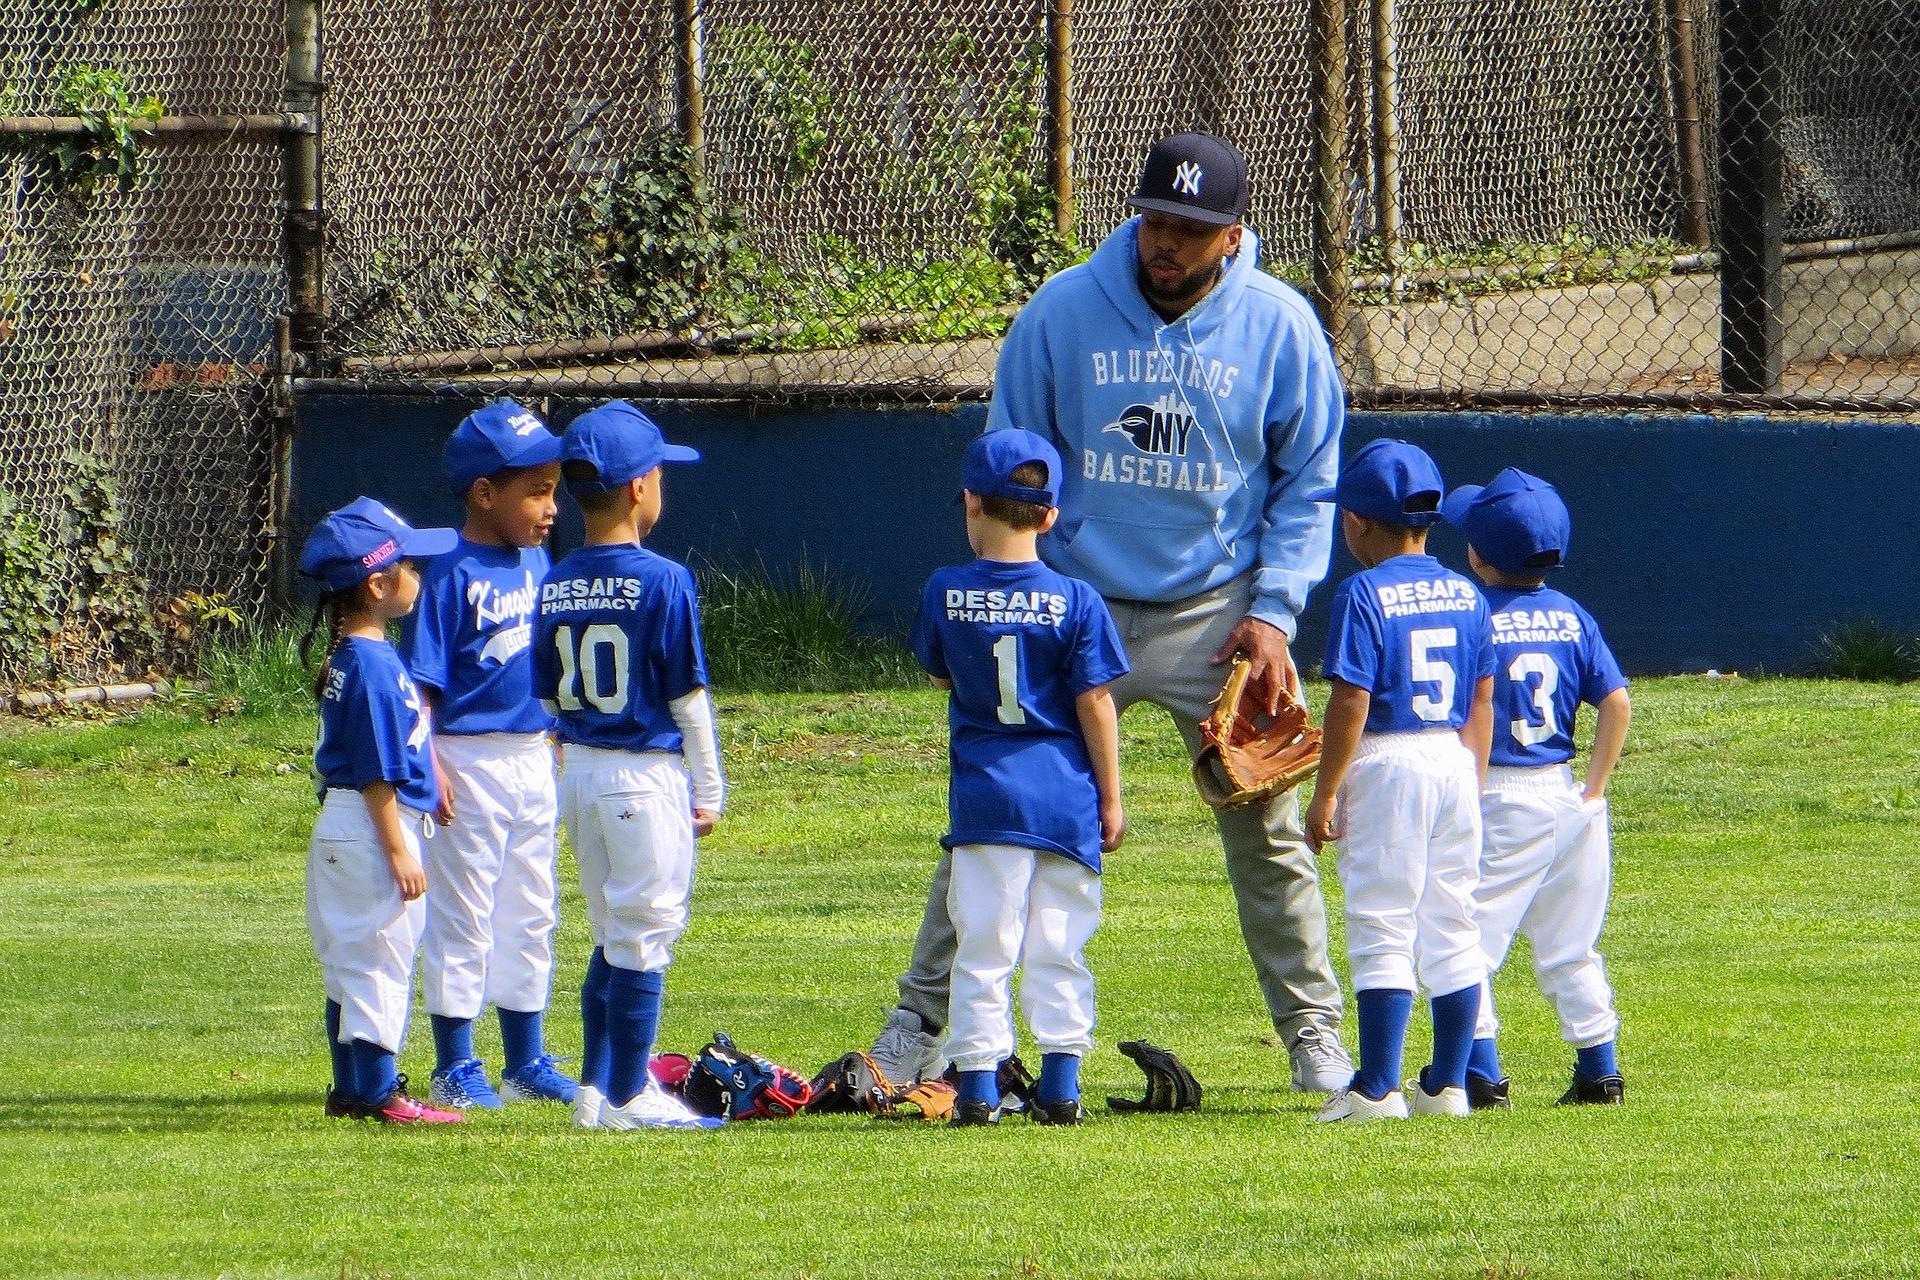 Youth baseball coach giving his team a pep talk.